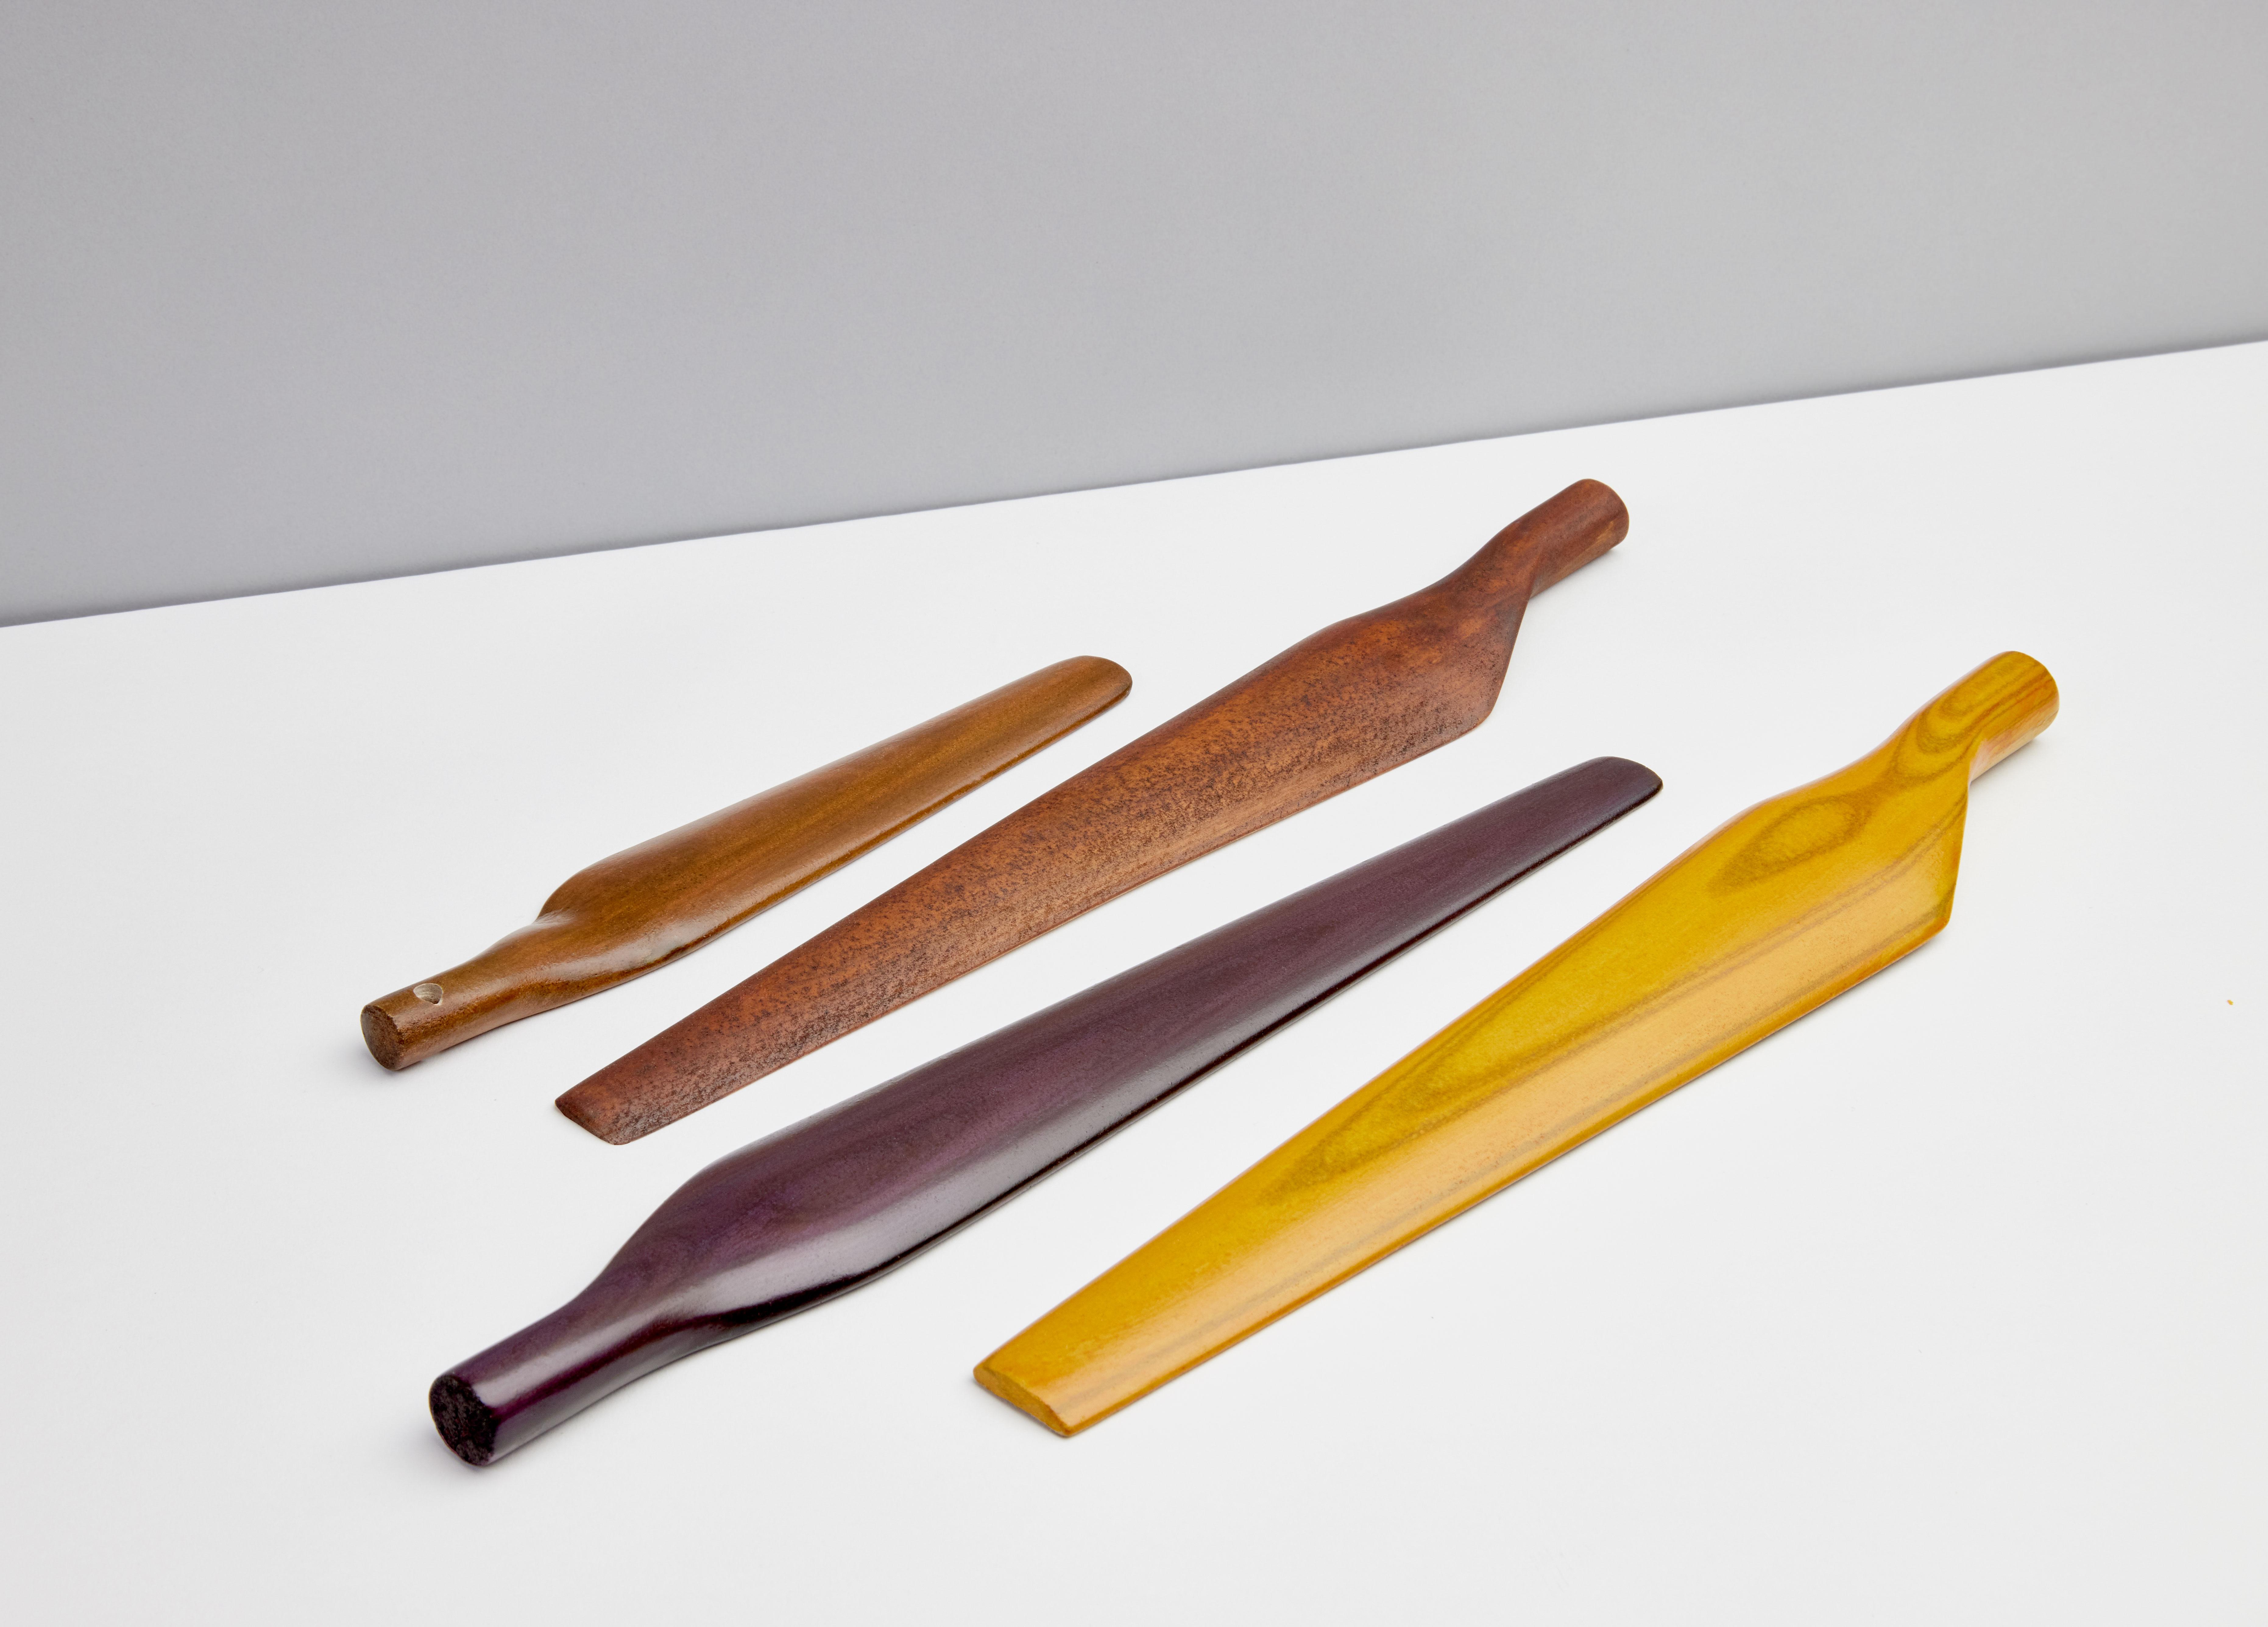 3D printed wooden propellers